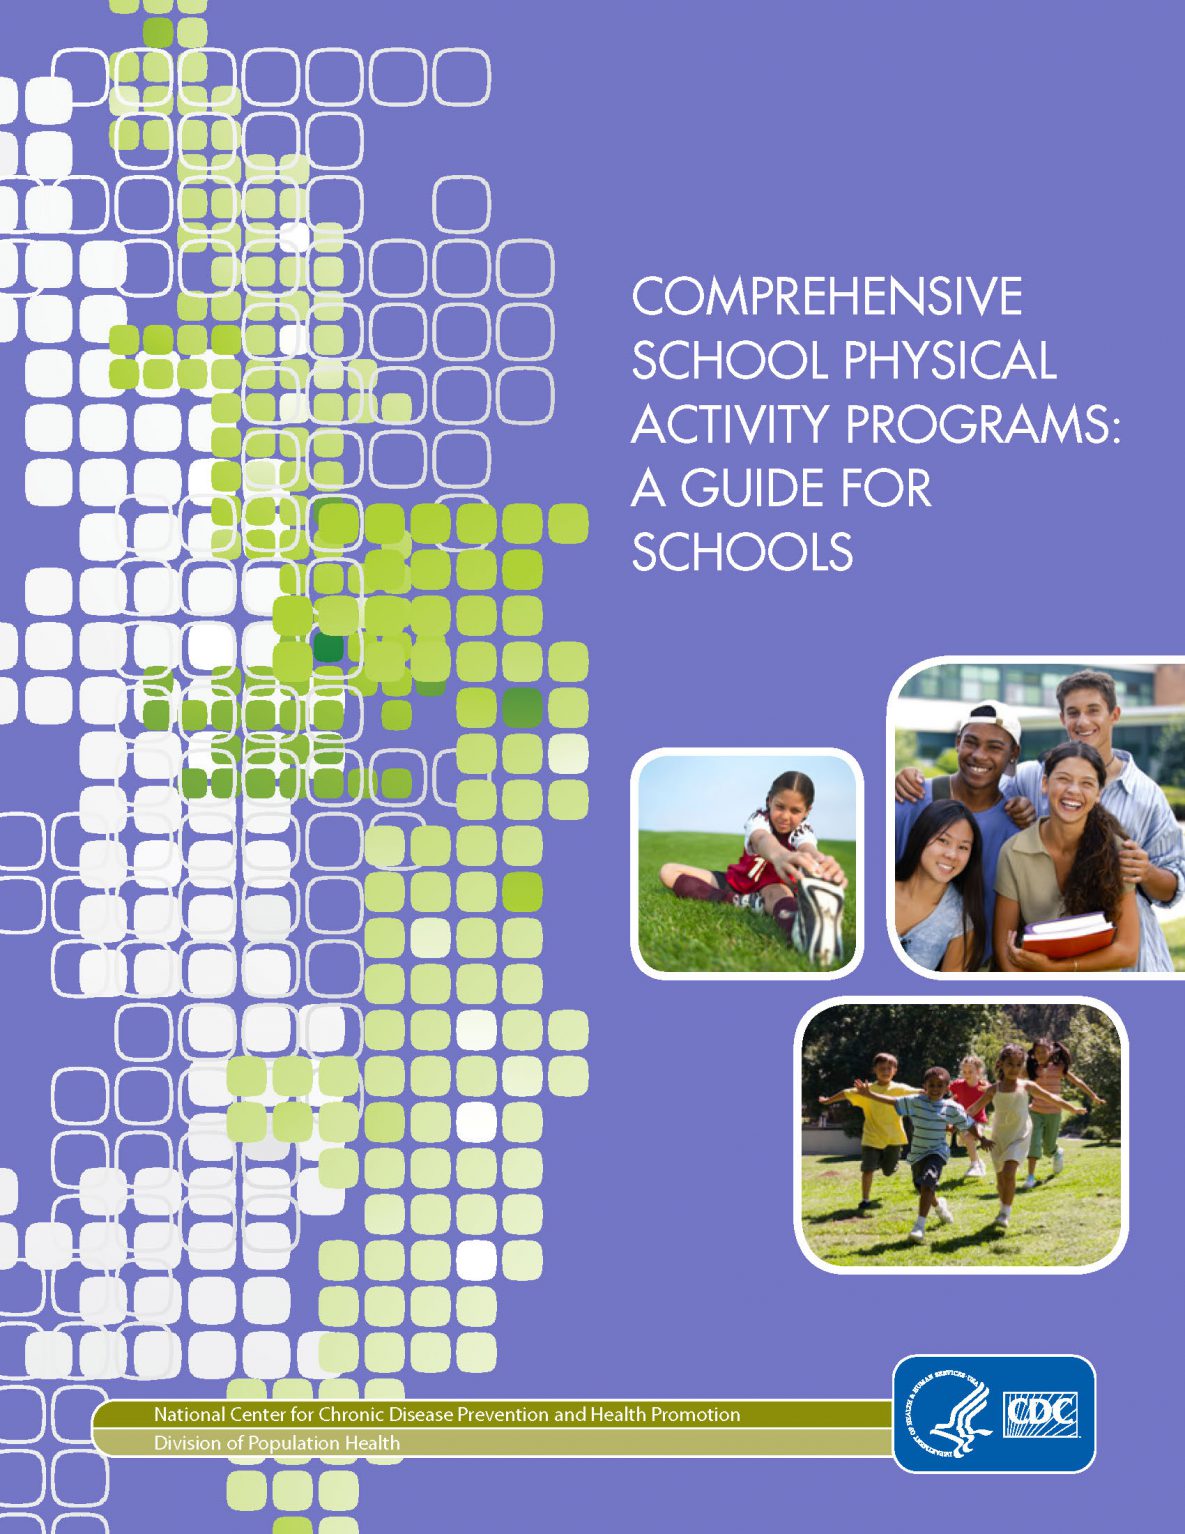 Comprehensive School Physical Activity Program (CSPAP): A Guide for Schools